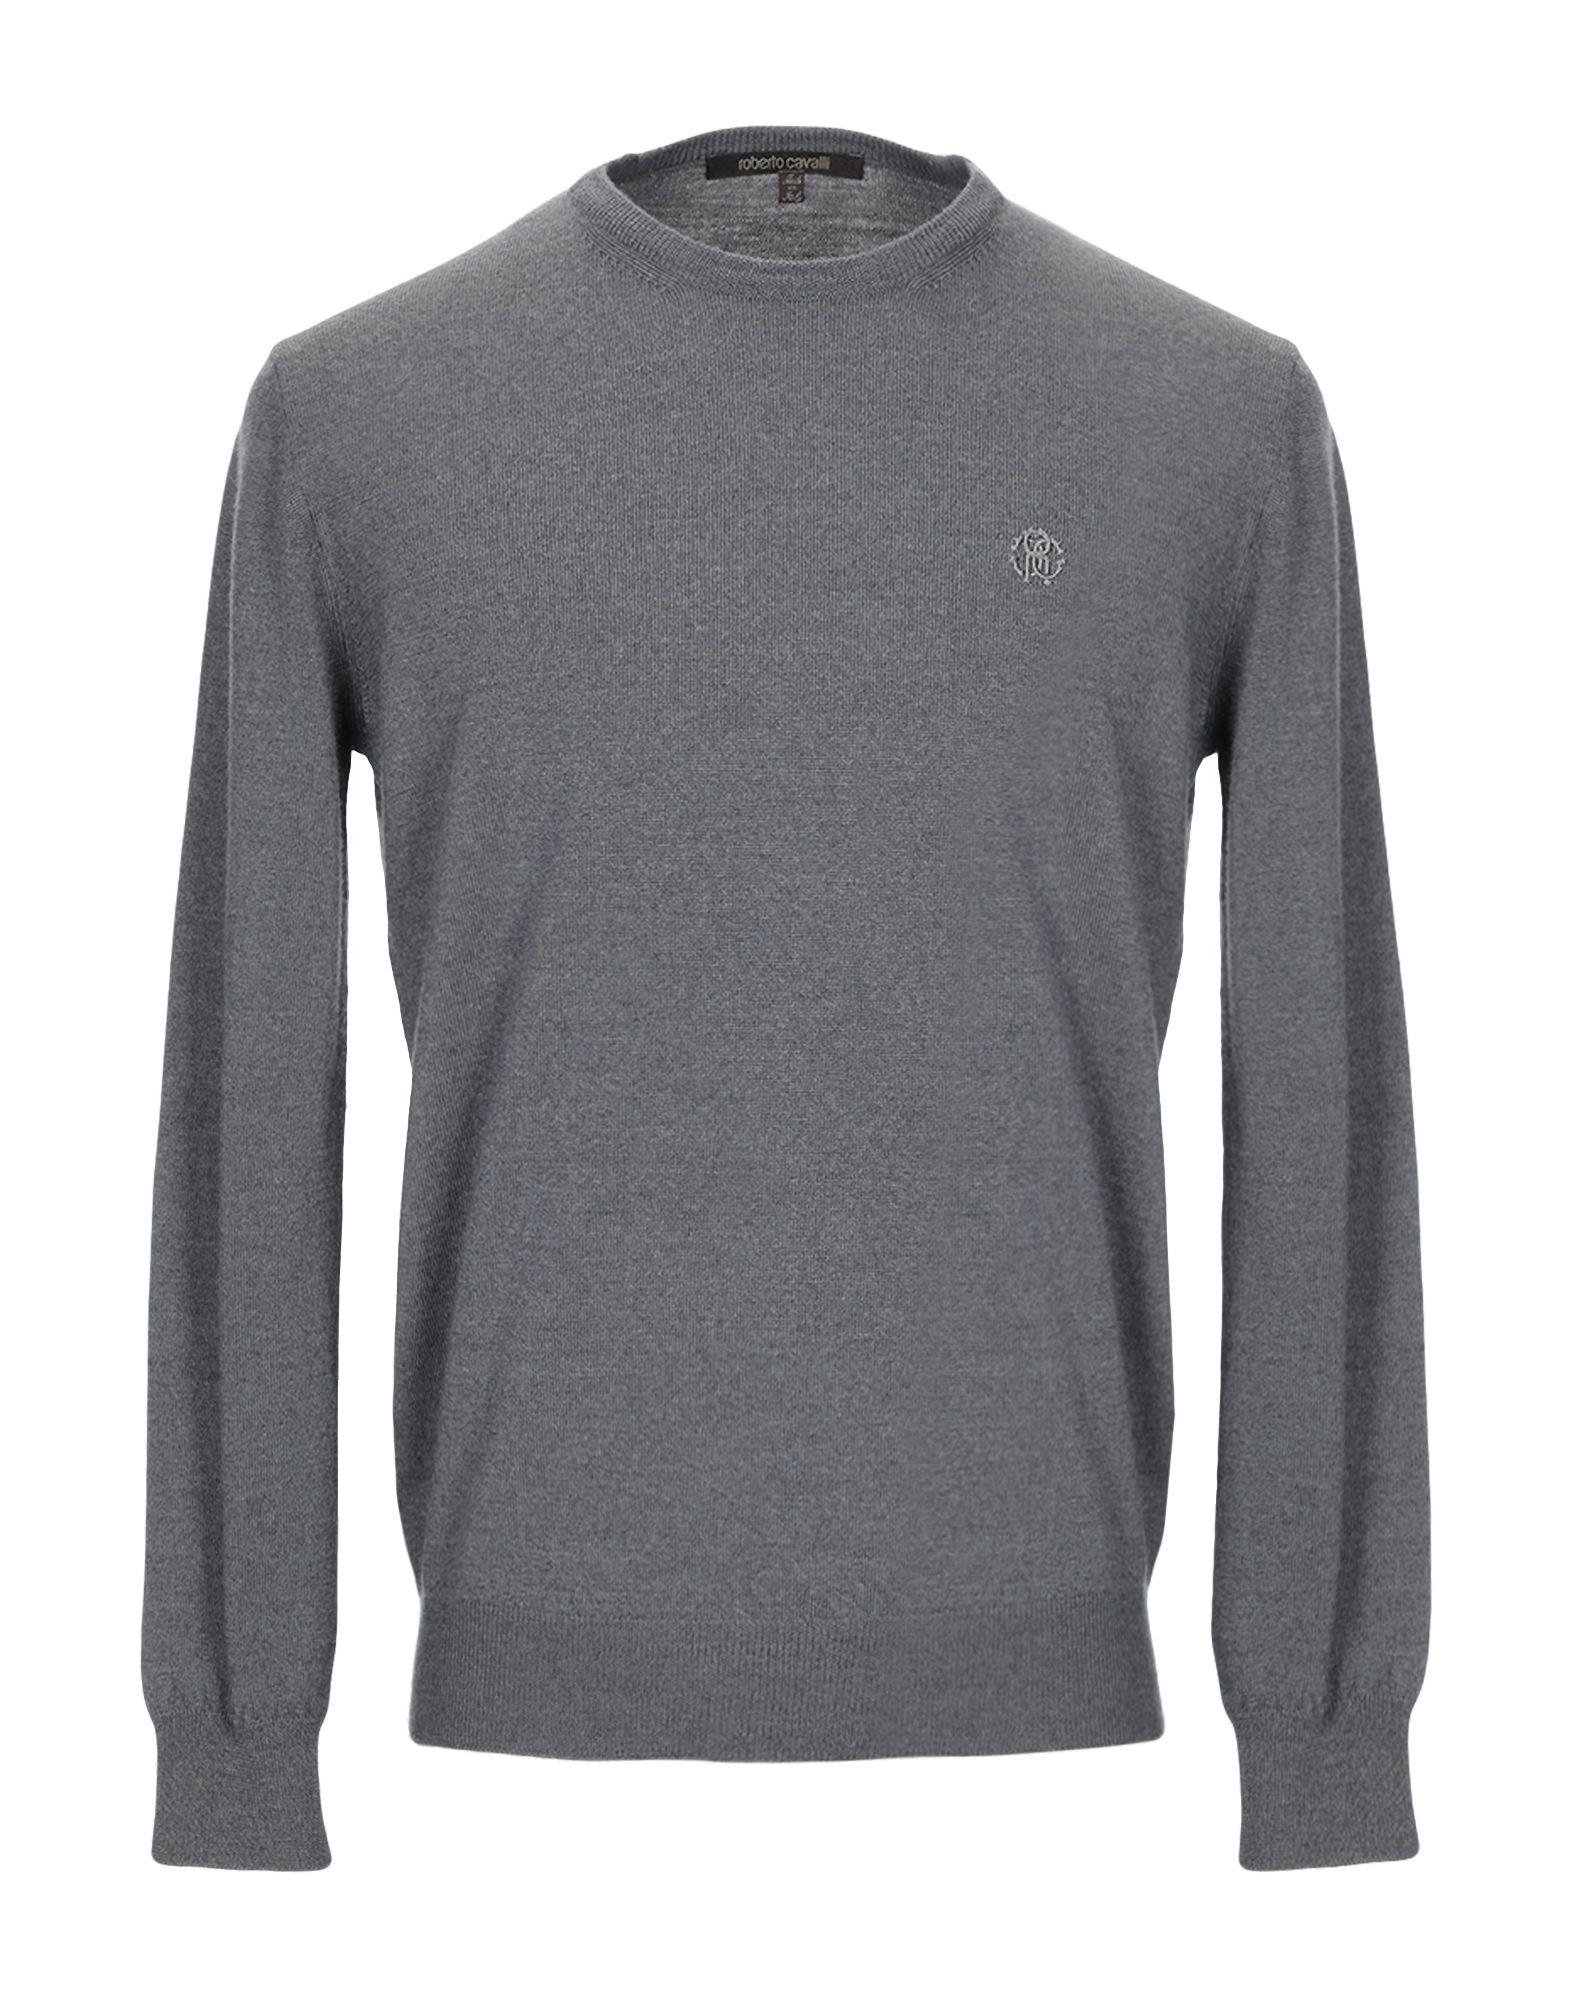 Roberto Cavalli Sweater in Grey (Gray) for Men - Lyst